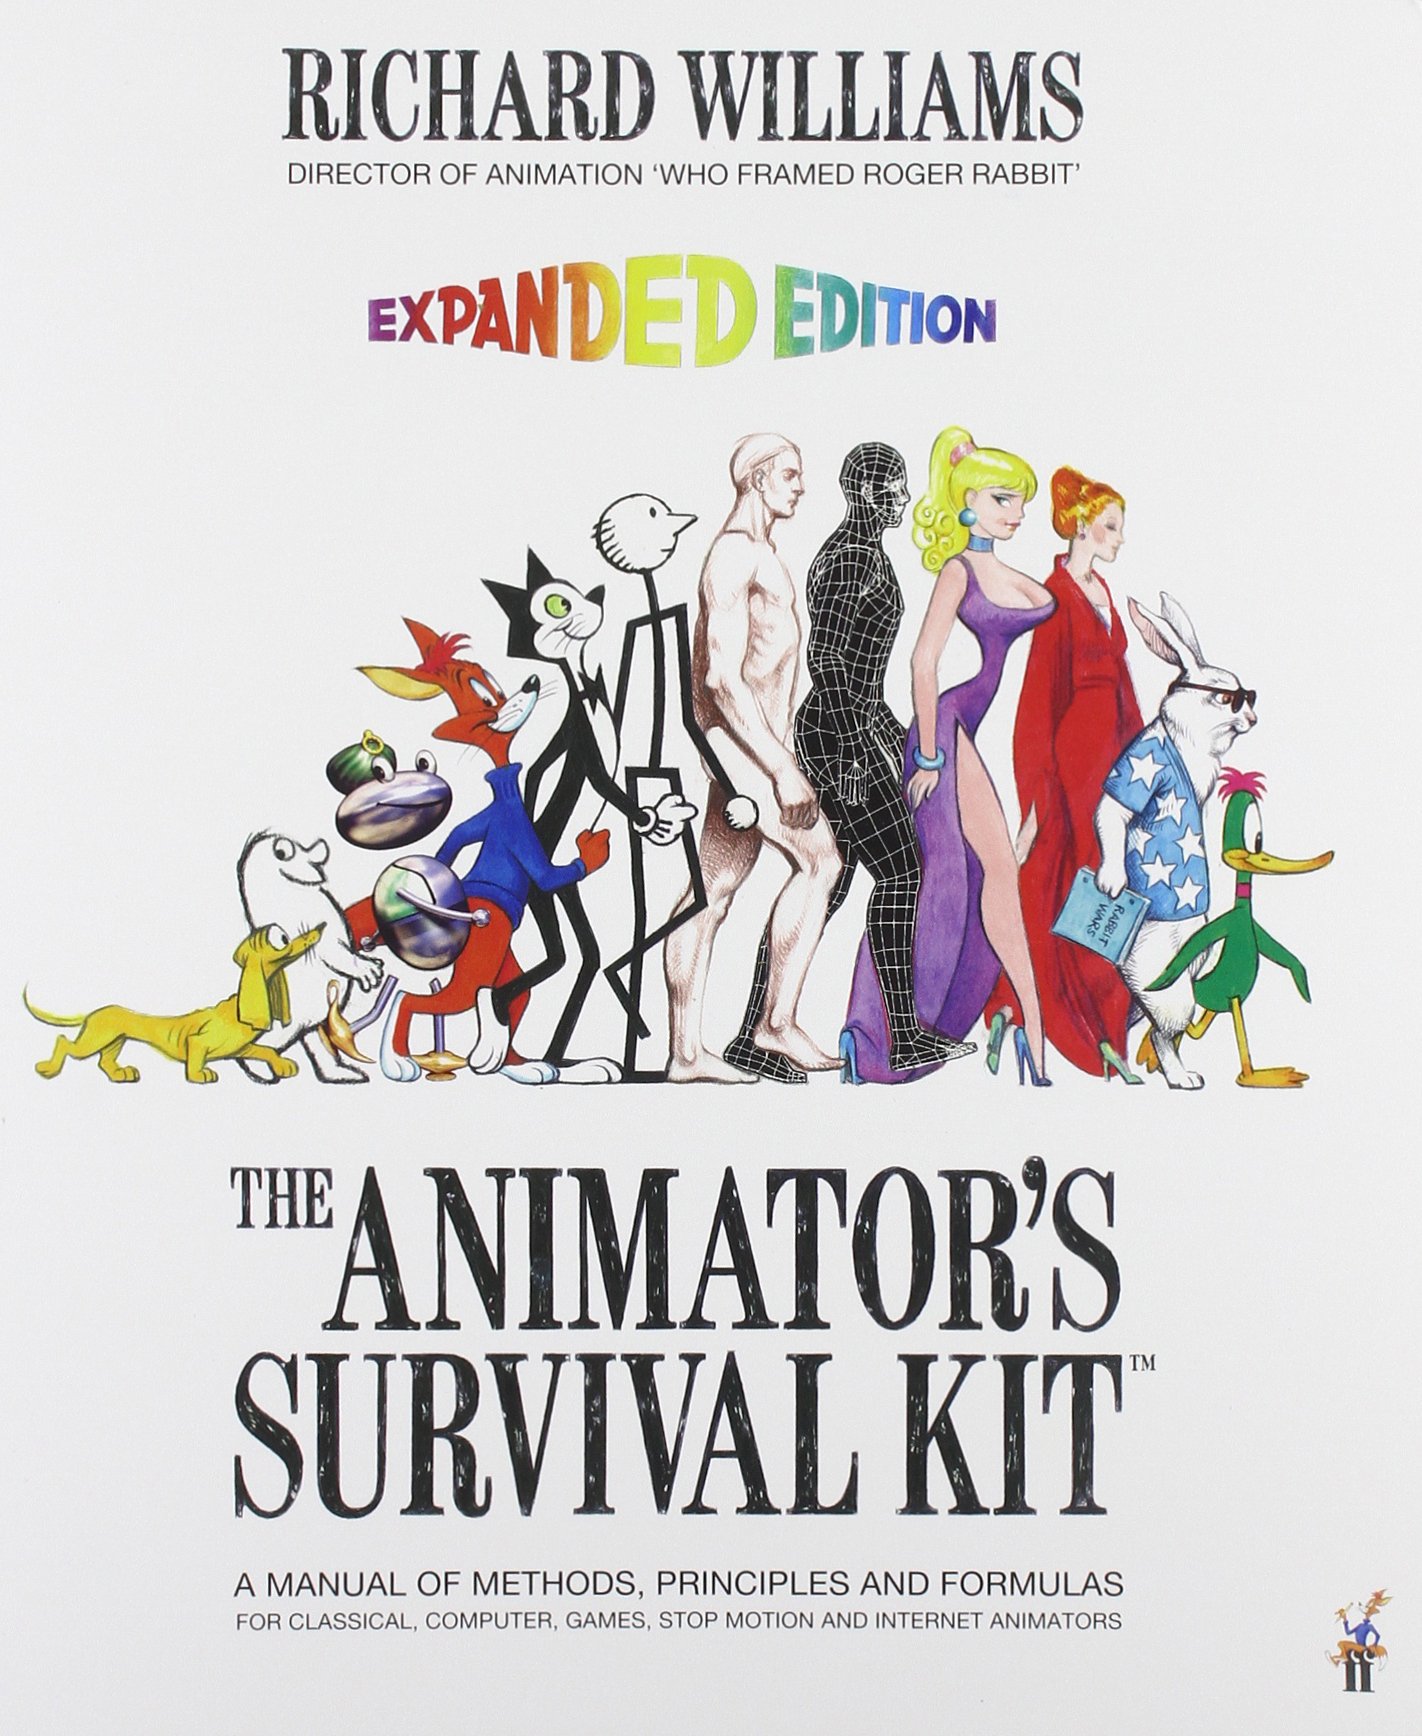 6The Animators Survival Kit